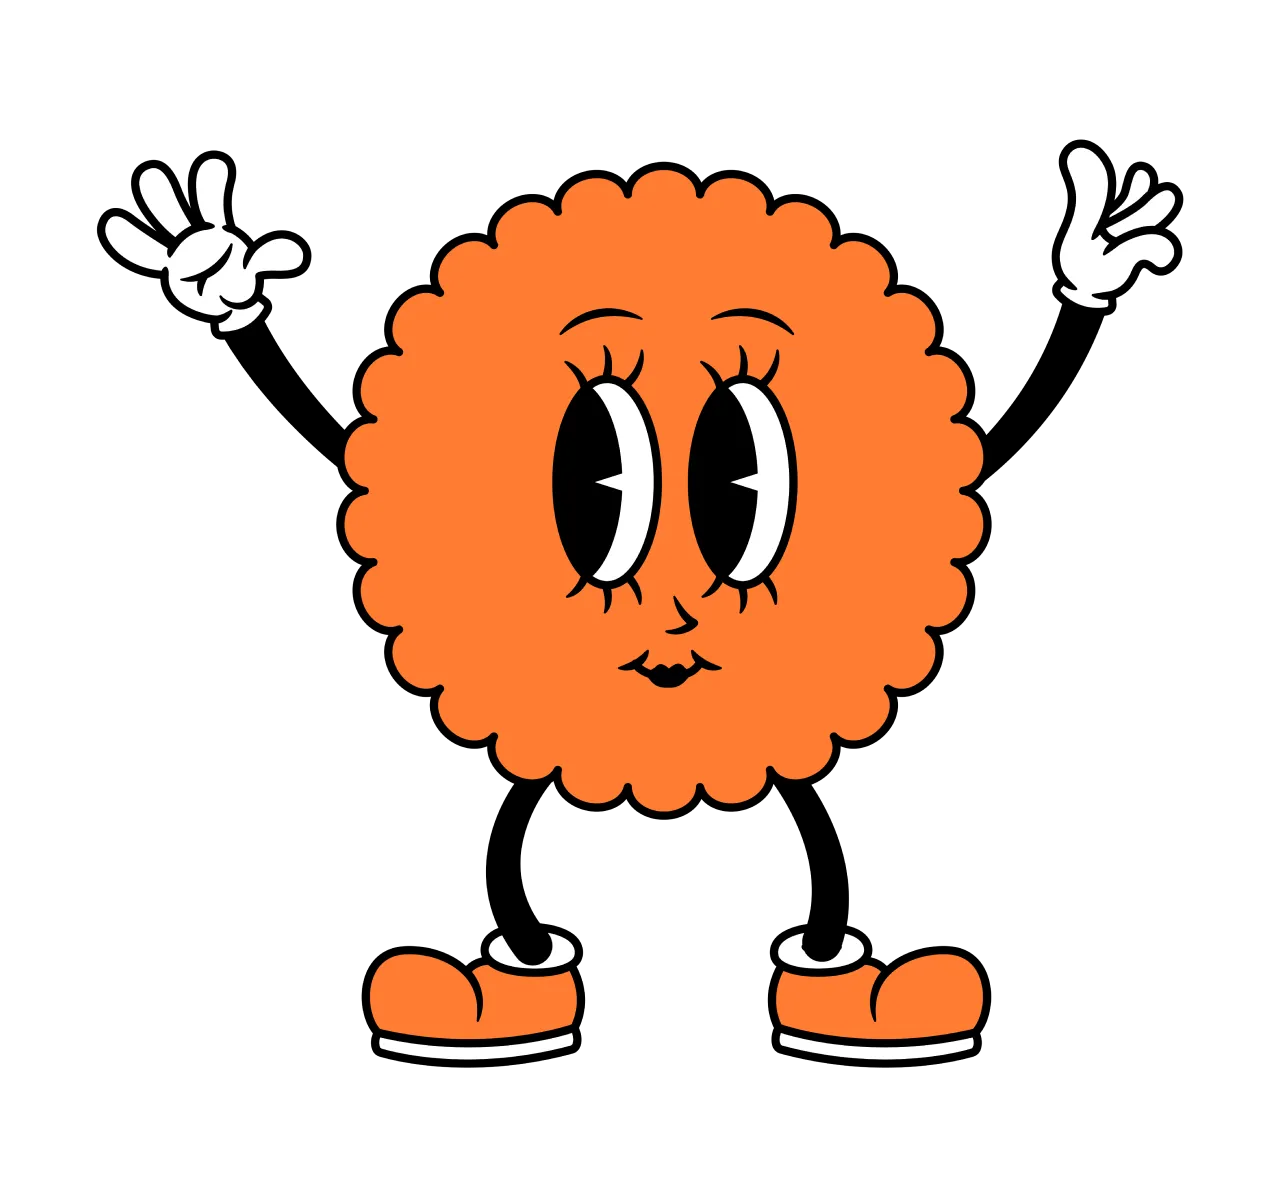 Orange Cartoon Character